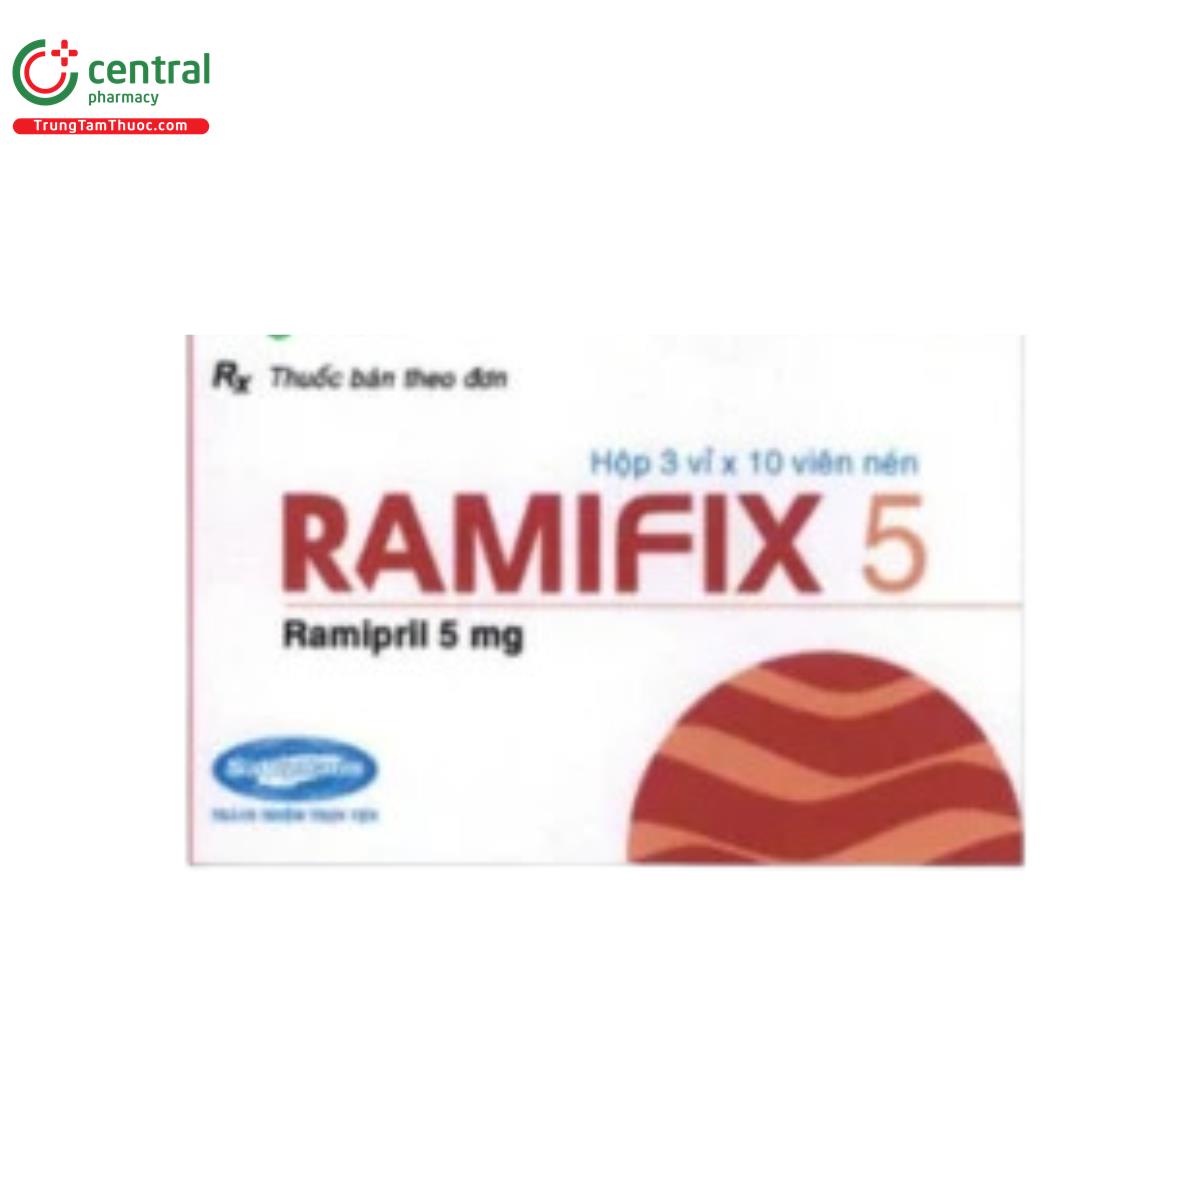 ramifix 5 3 A0281